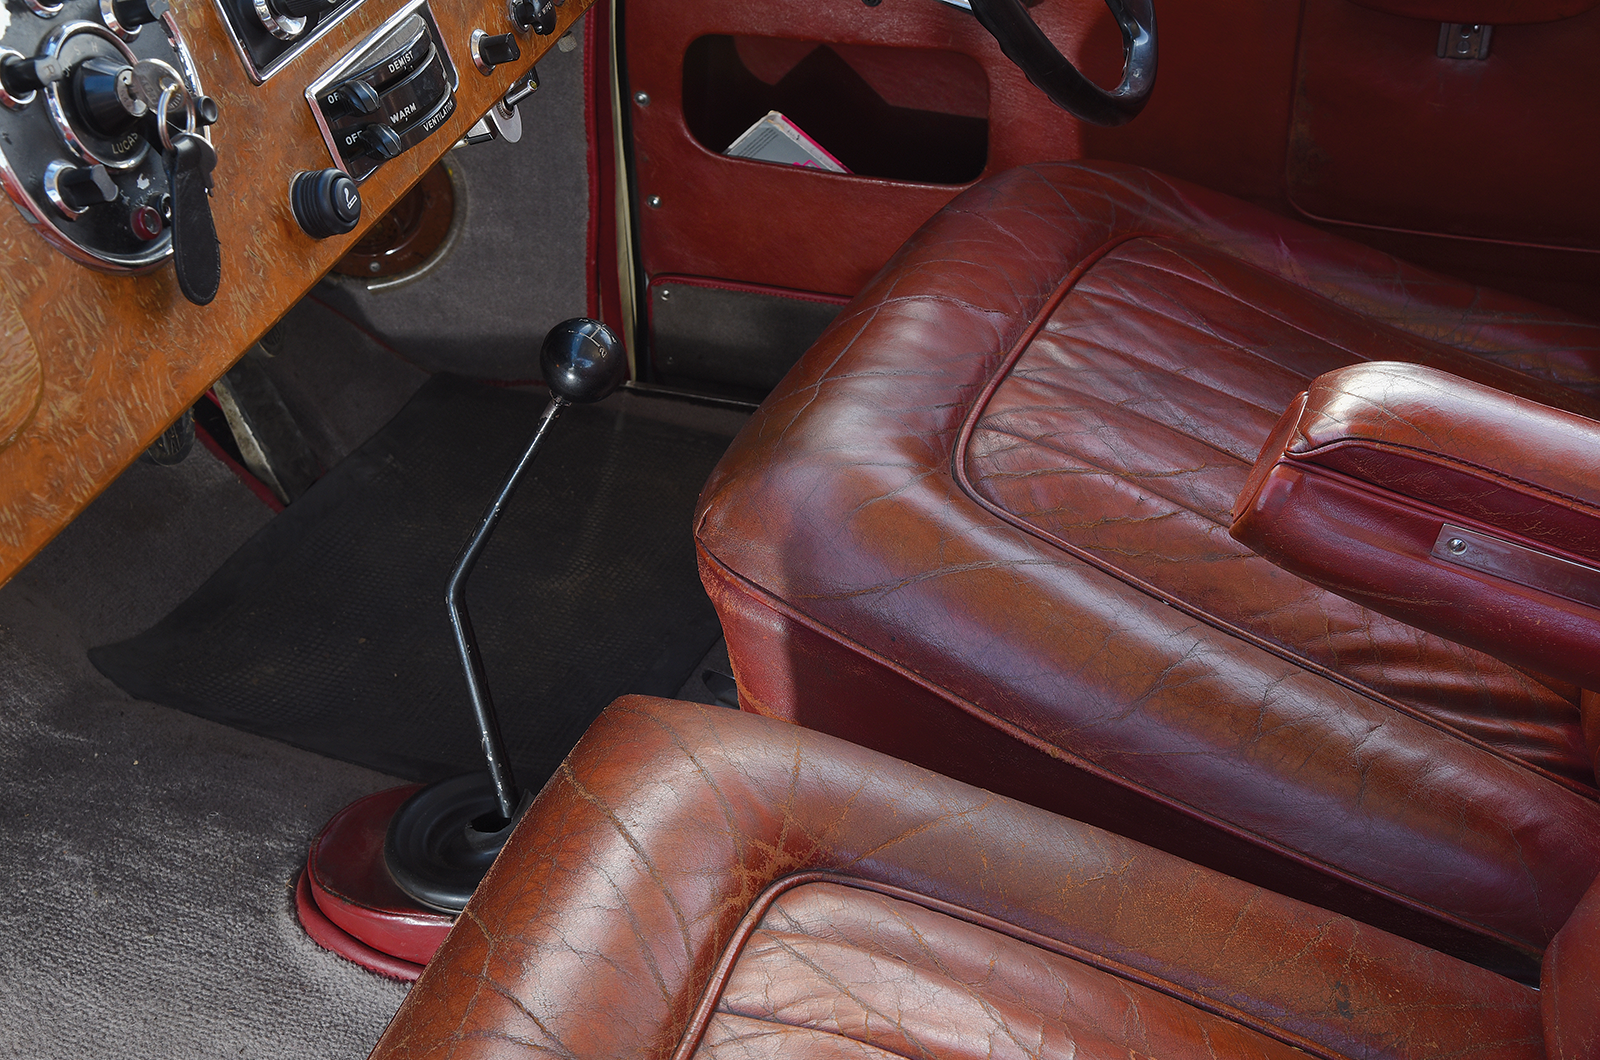 Classic & Sports Car – Buyer’s guide: Lagonda 2.6 Litre / 3 Litre